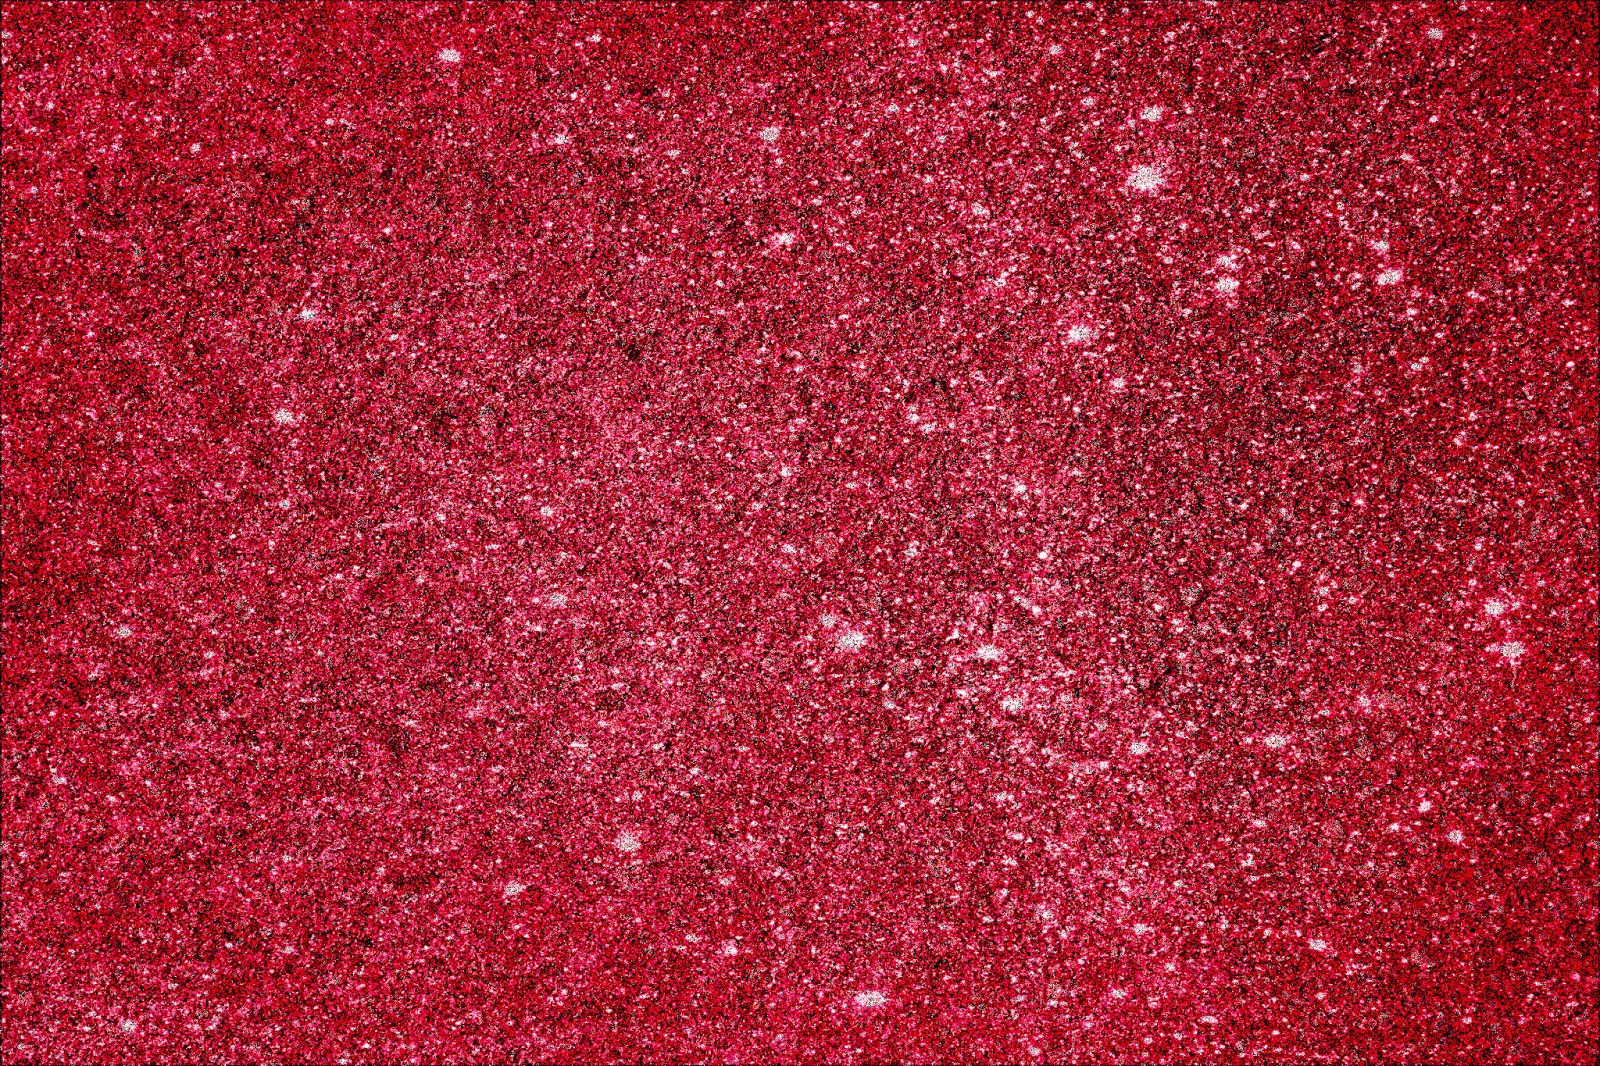 Red Glitter Wallpaper Free Download Wallpaper DaWallpaperz